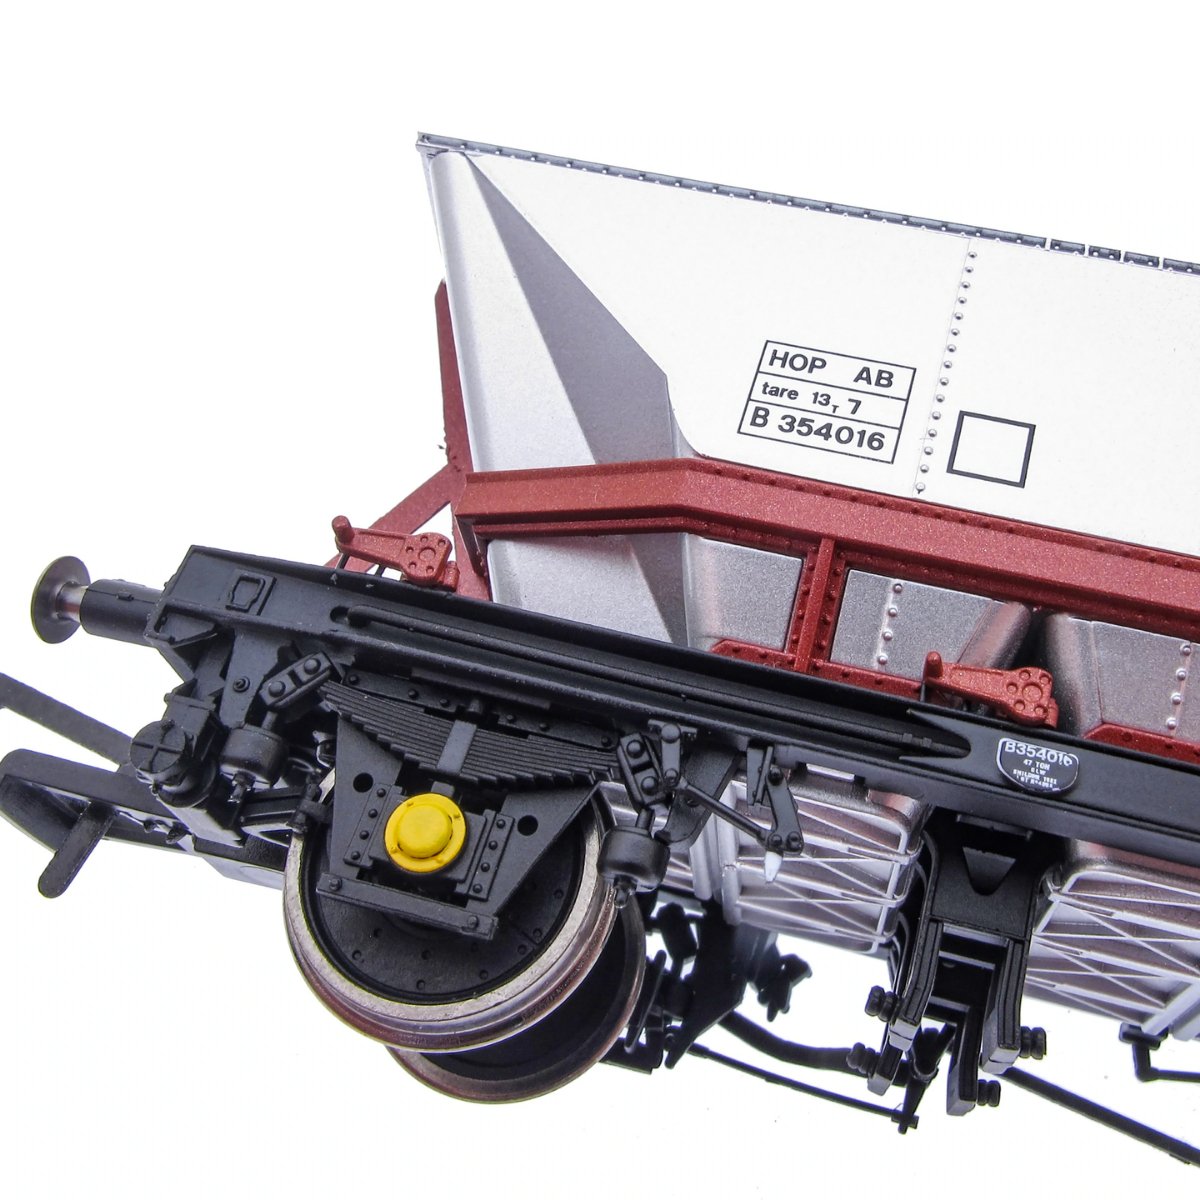 Accurascale HAA Coal Hopper Wagon Set (3) Railfreight Red - Pack 2 - Phillips Hobbies